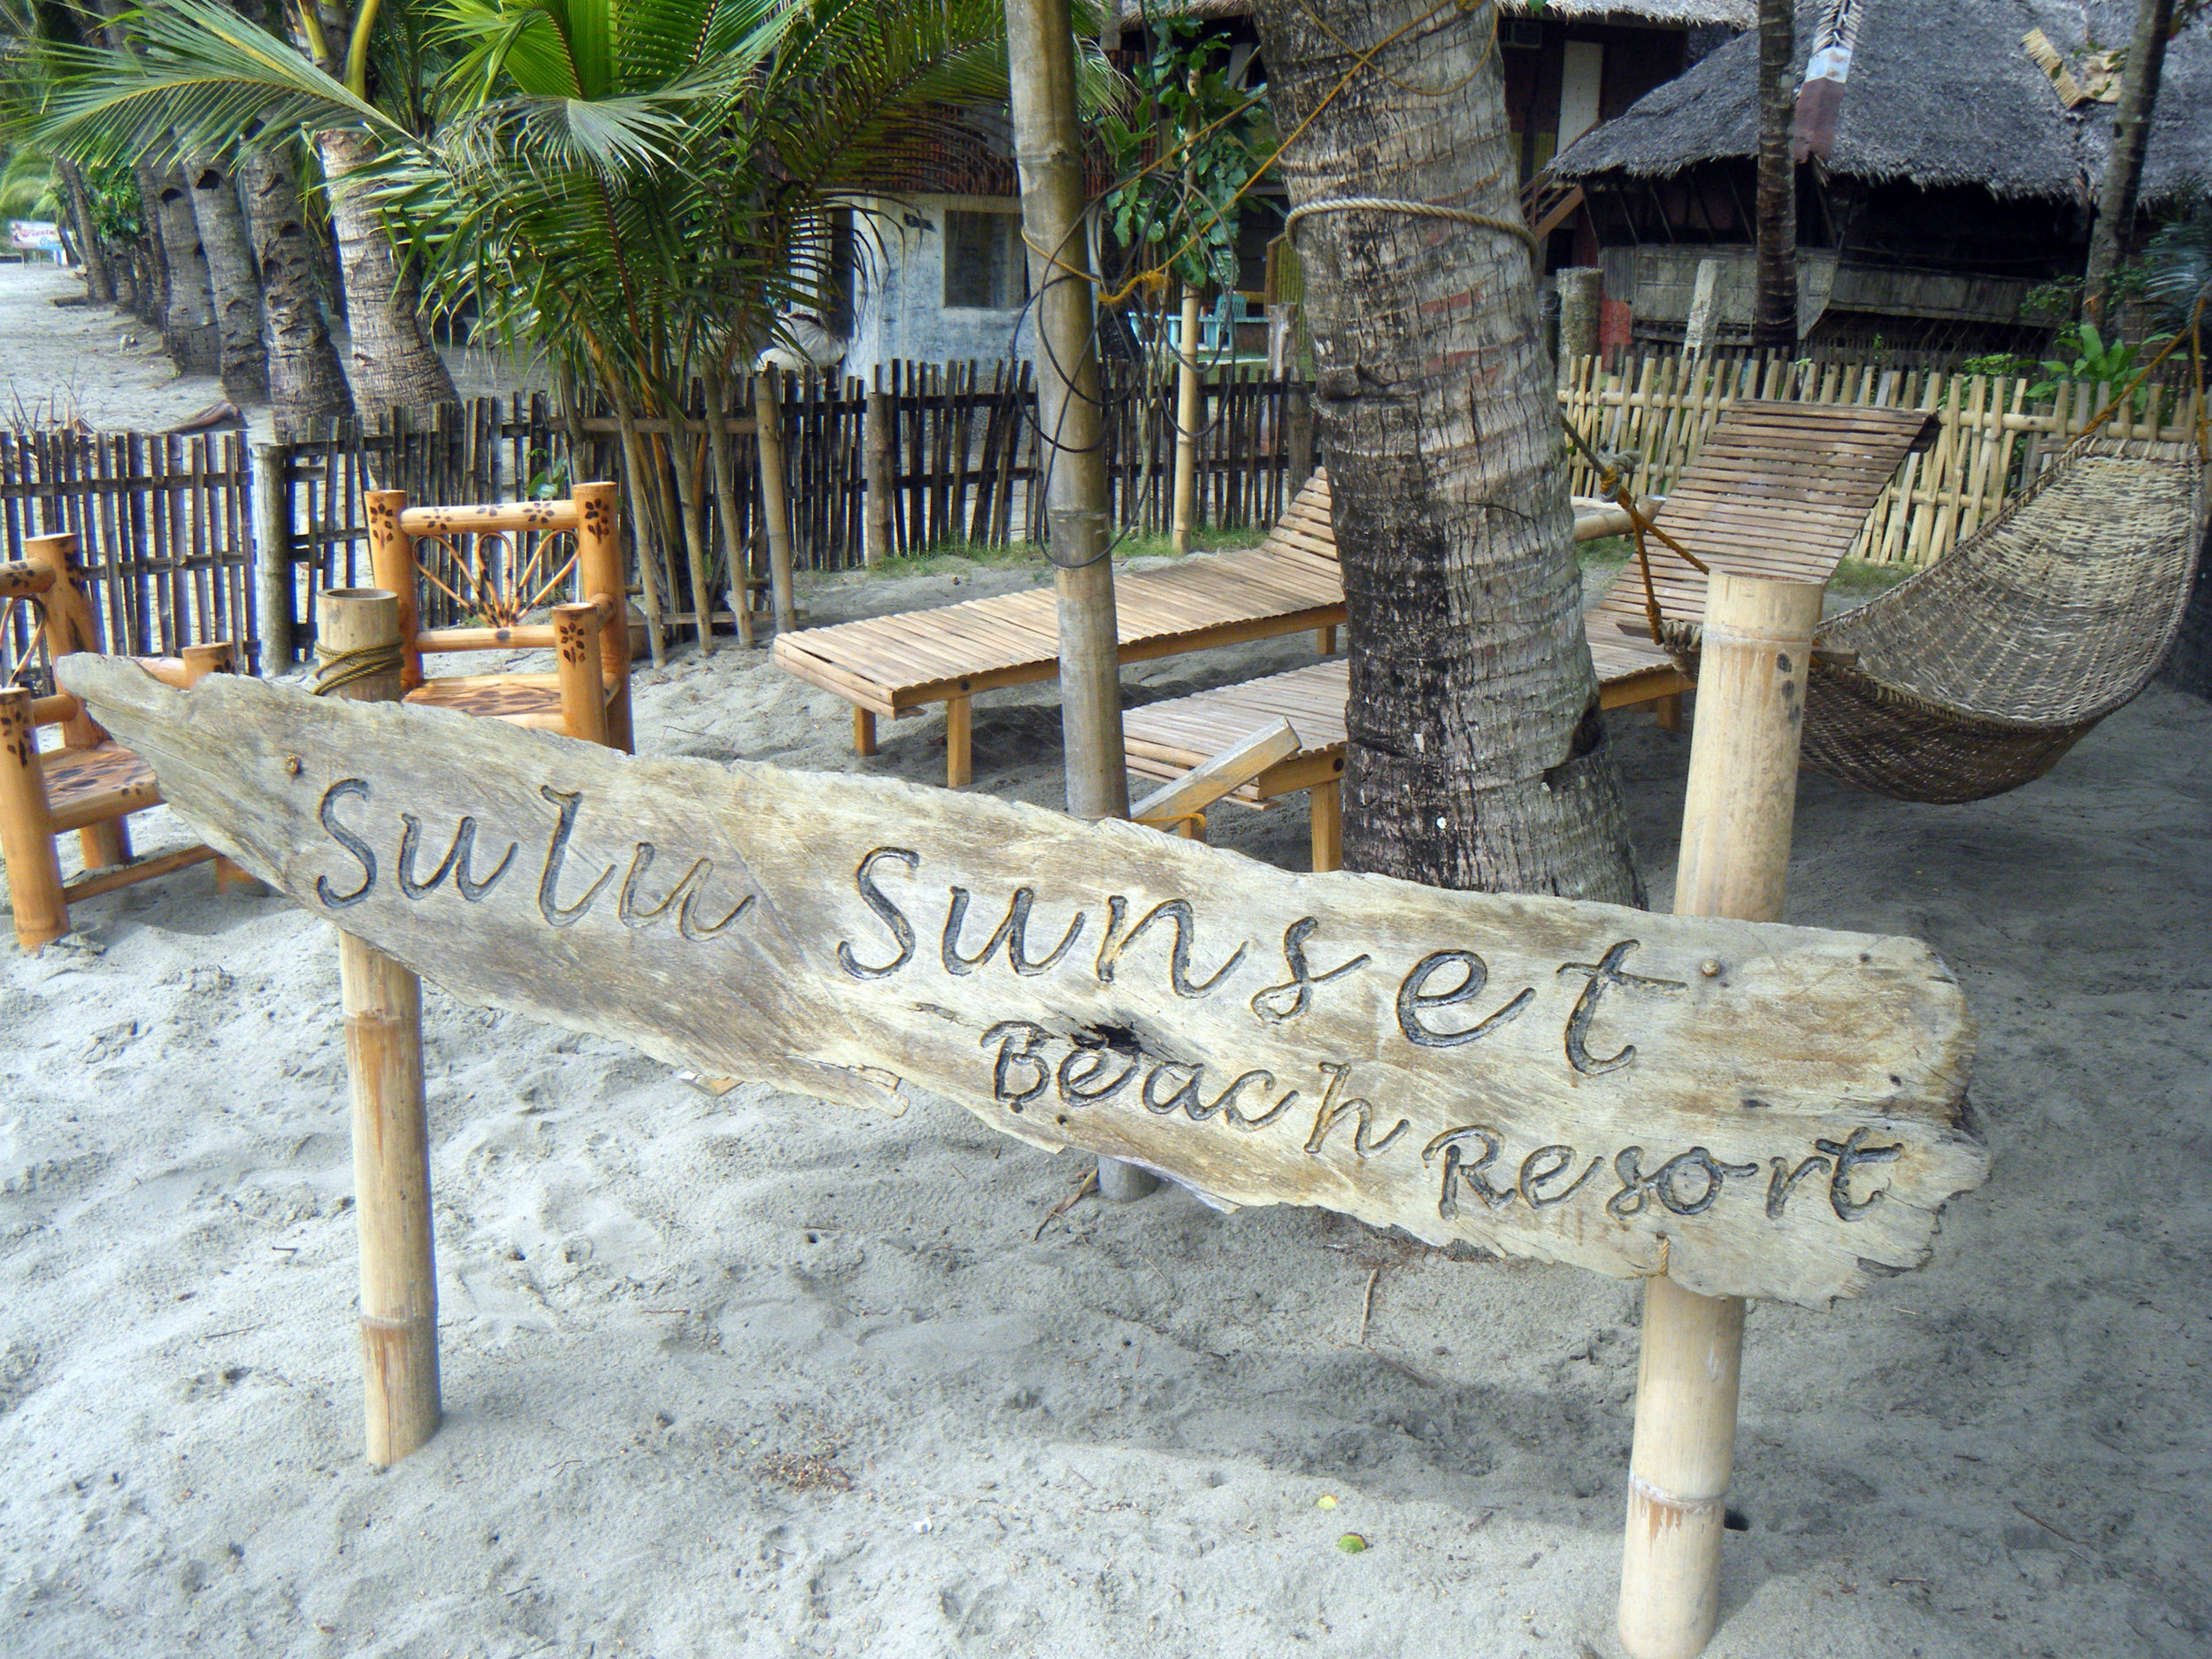 Sulu Sunset Beach Resort.jpg